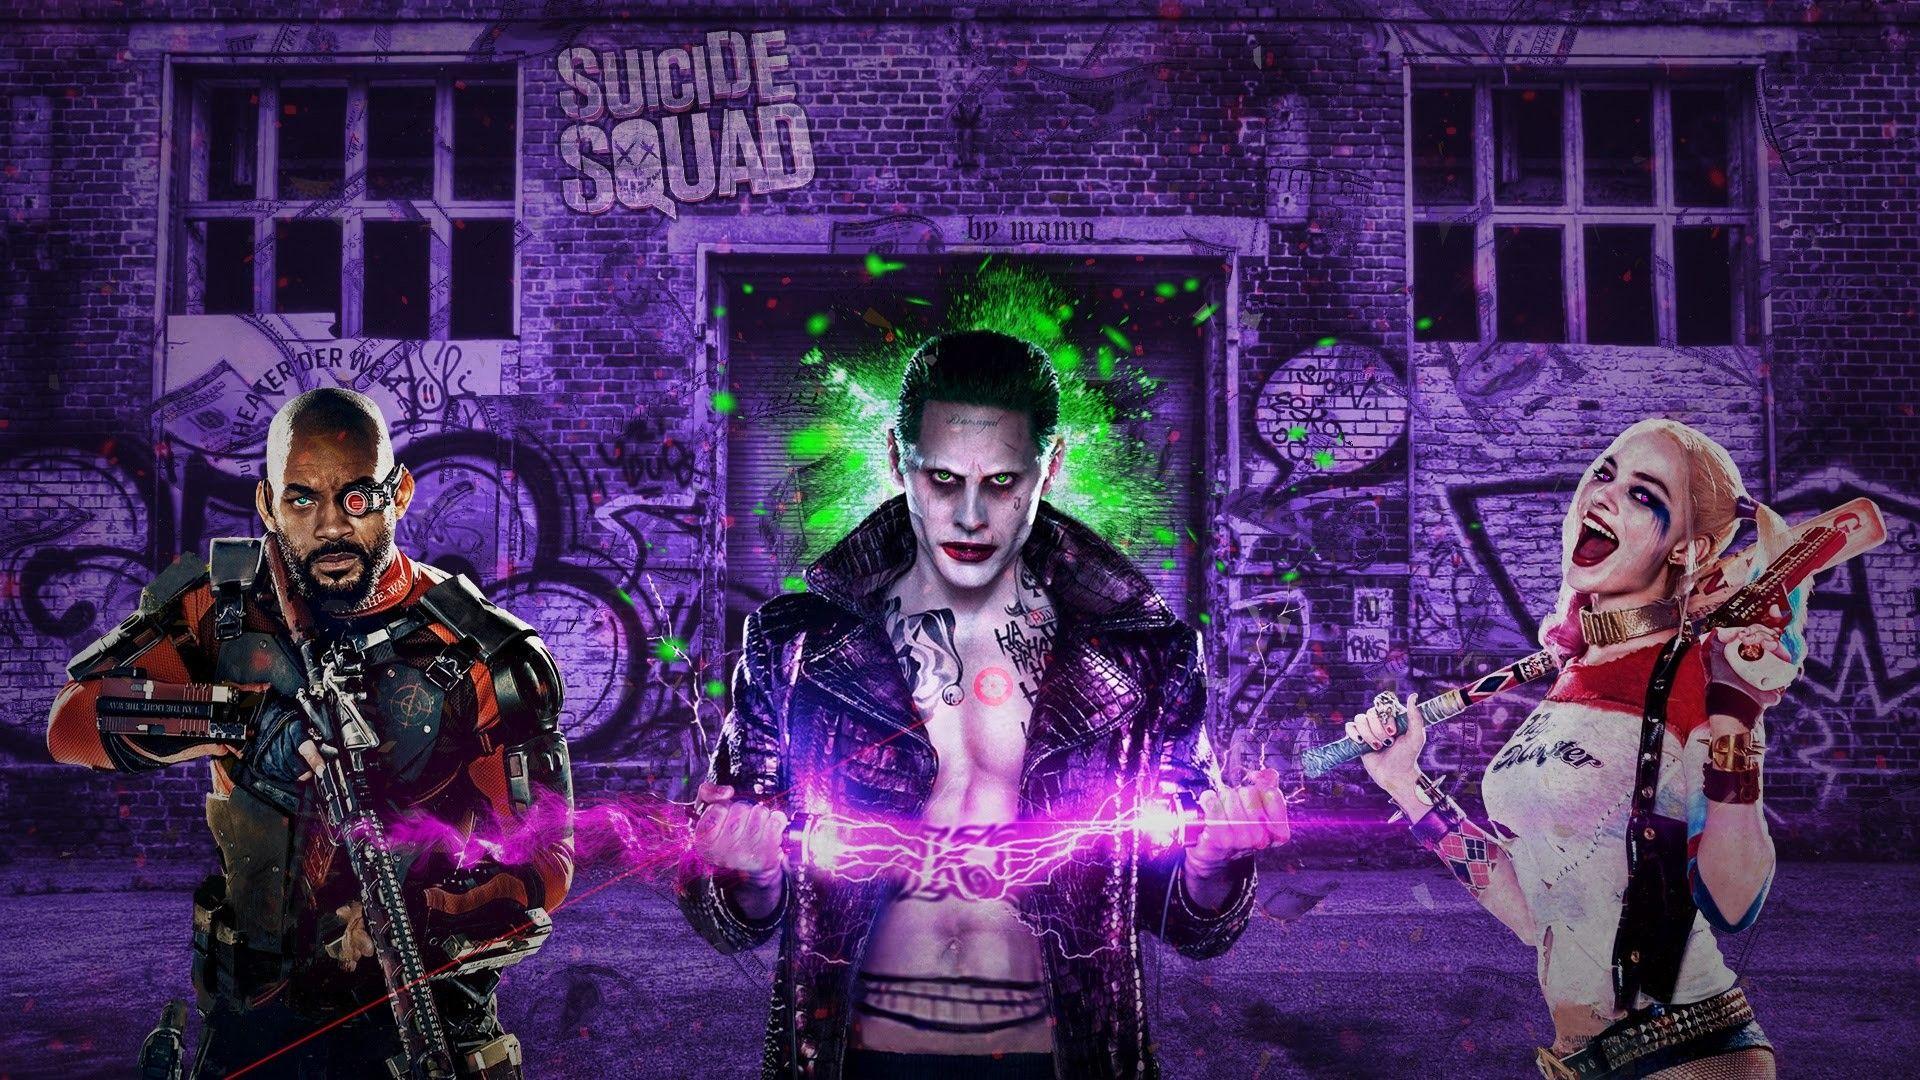 Joker Suicide Squad Wallpaper.com Wallpaper World